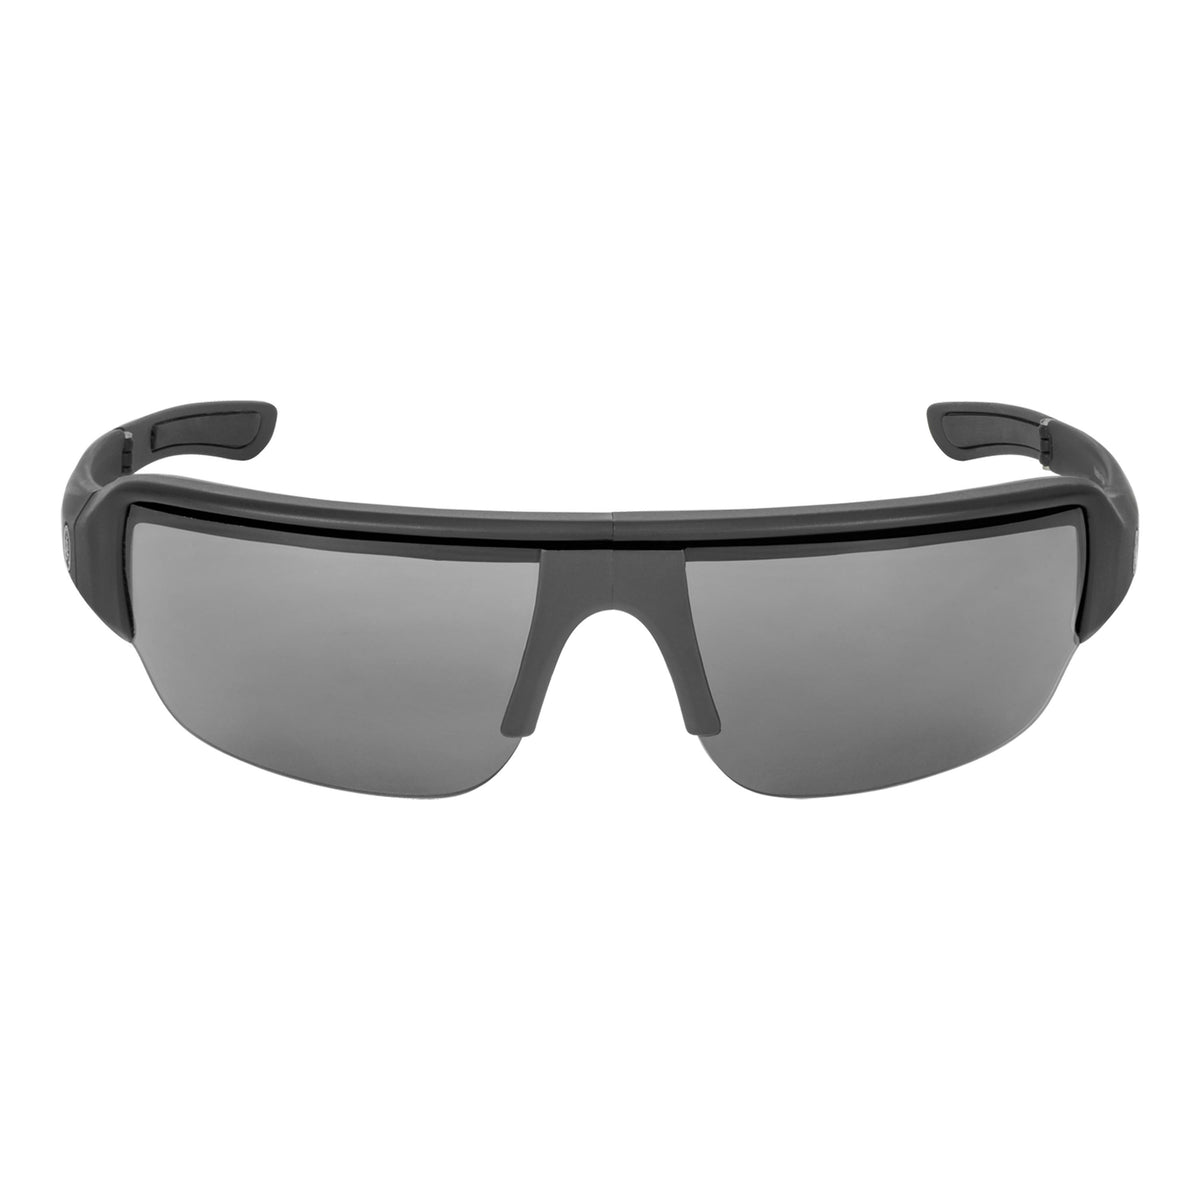 Popticals, Premium Compact Sunglasses, PopGun, 010010-BMGS, Standard Sunglasses, Matte Black Frame, Gray Lenses, Front View